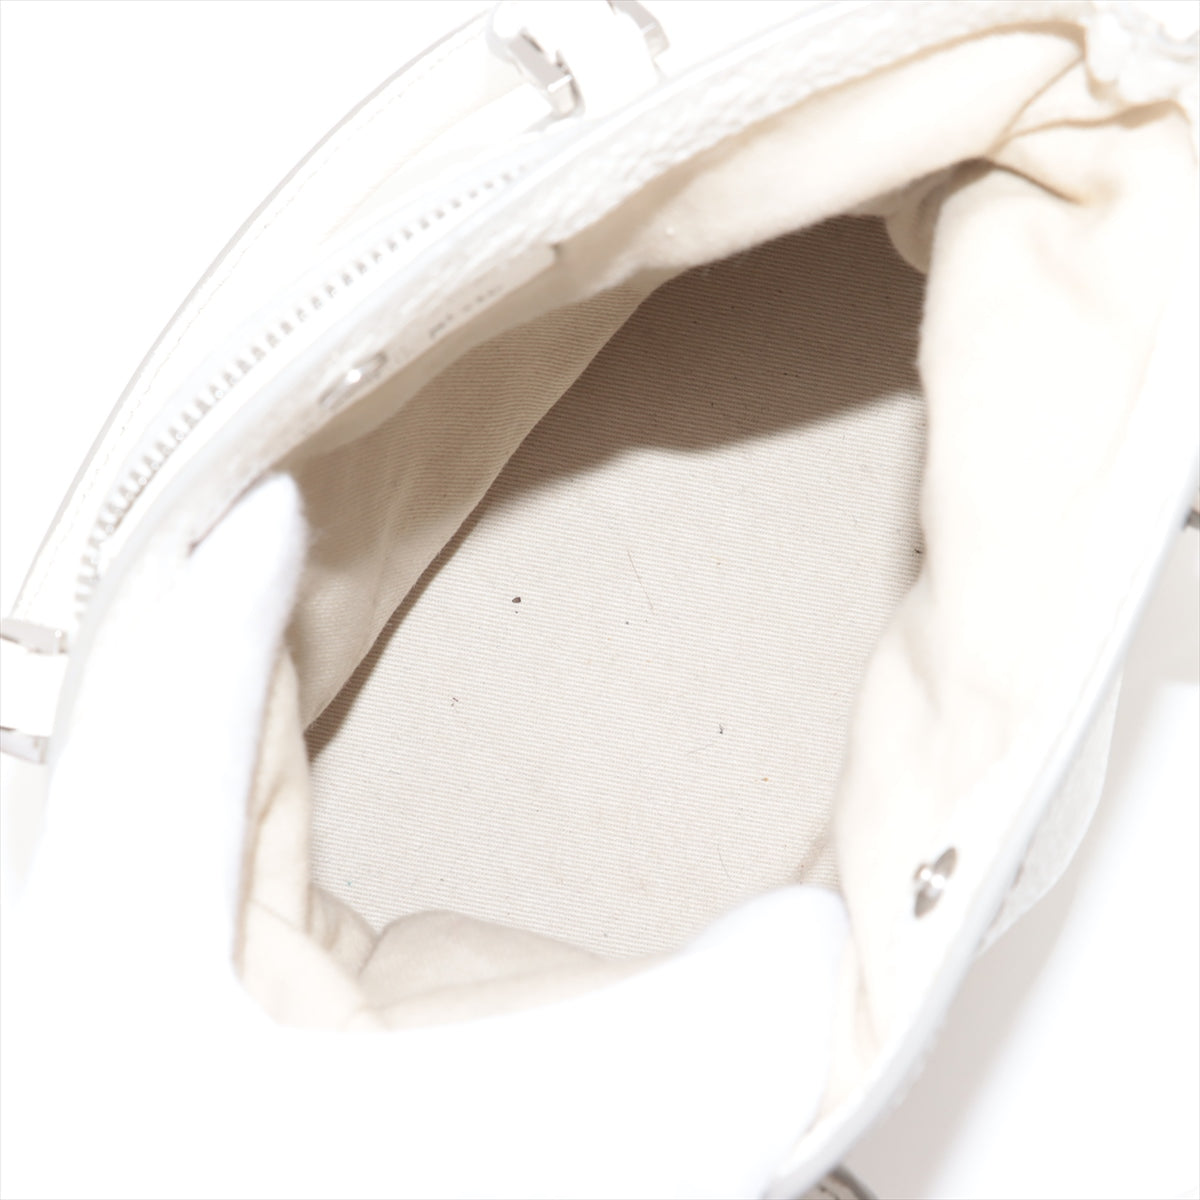 Meson Margiela 5AC Leather 2WAY Handbag White